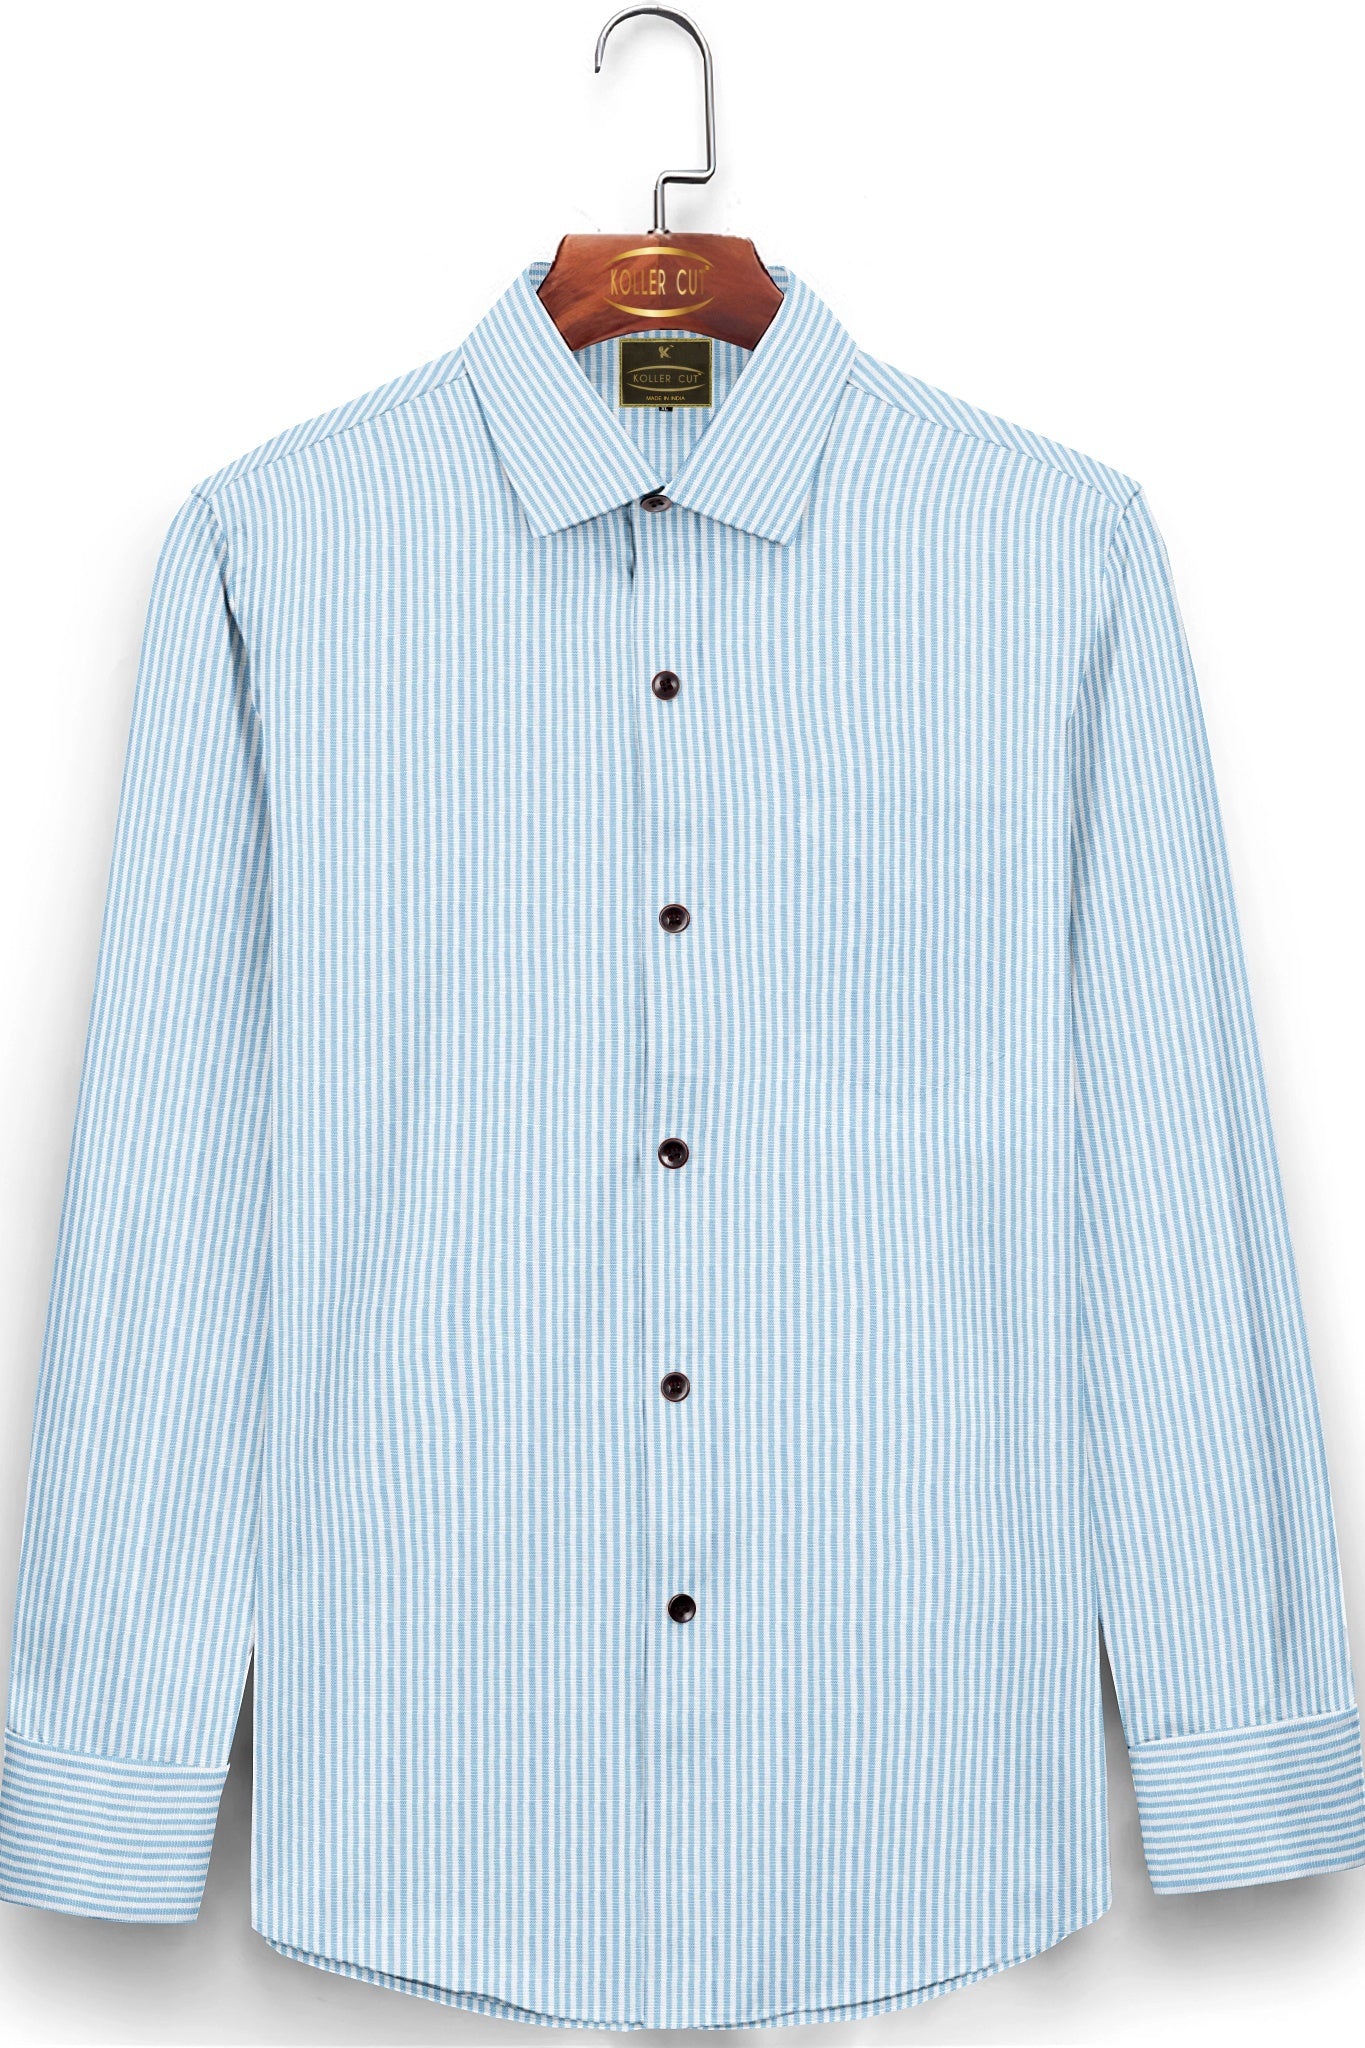 White with Sky blue Hickory Stripes Men's Cotton Linen Shirt